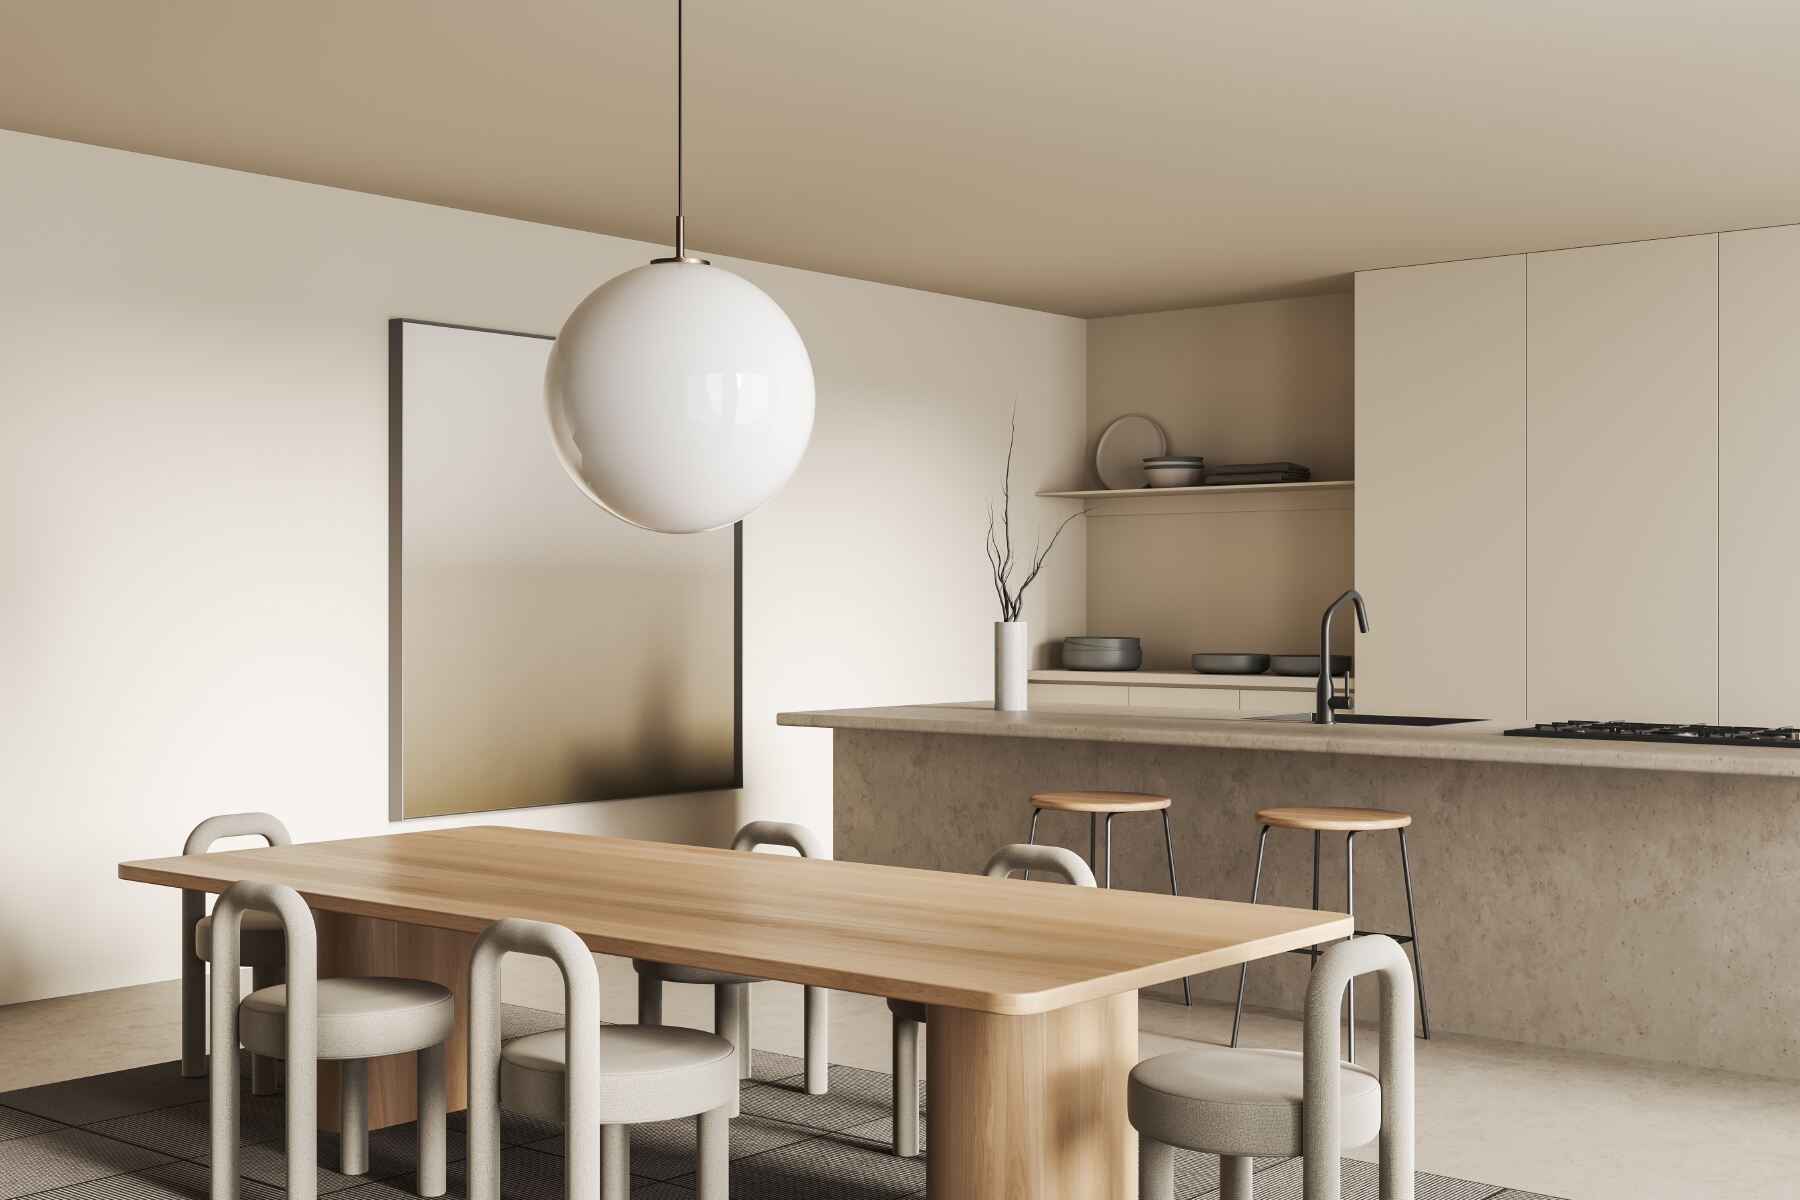 kitchen with geometric furniture